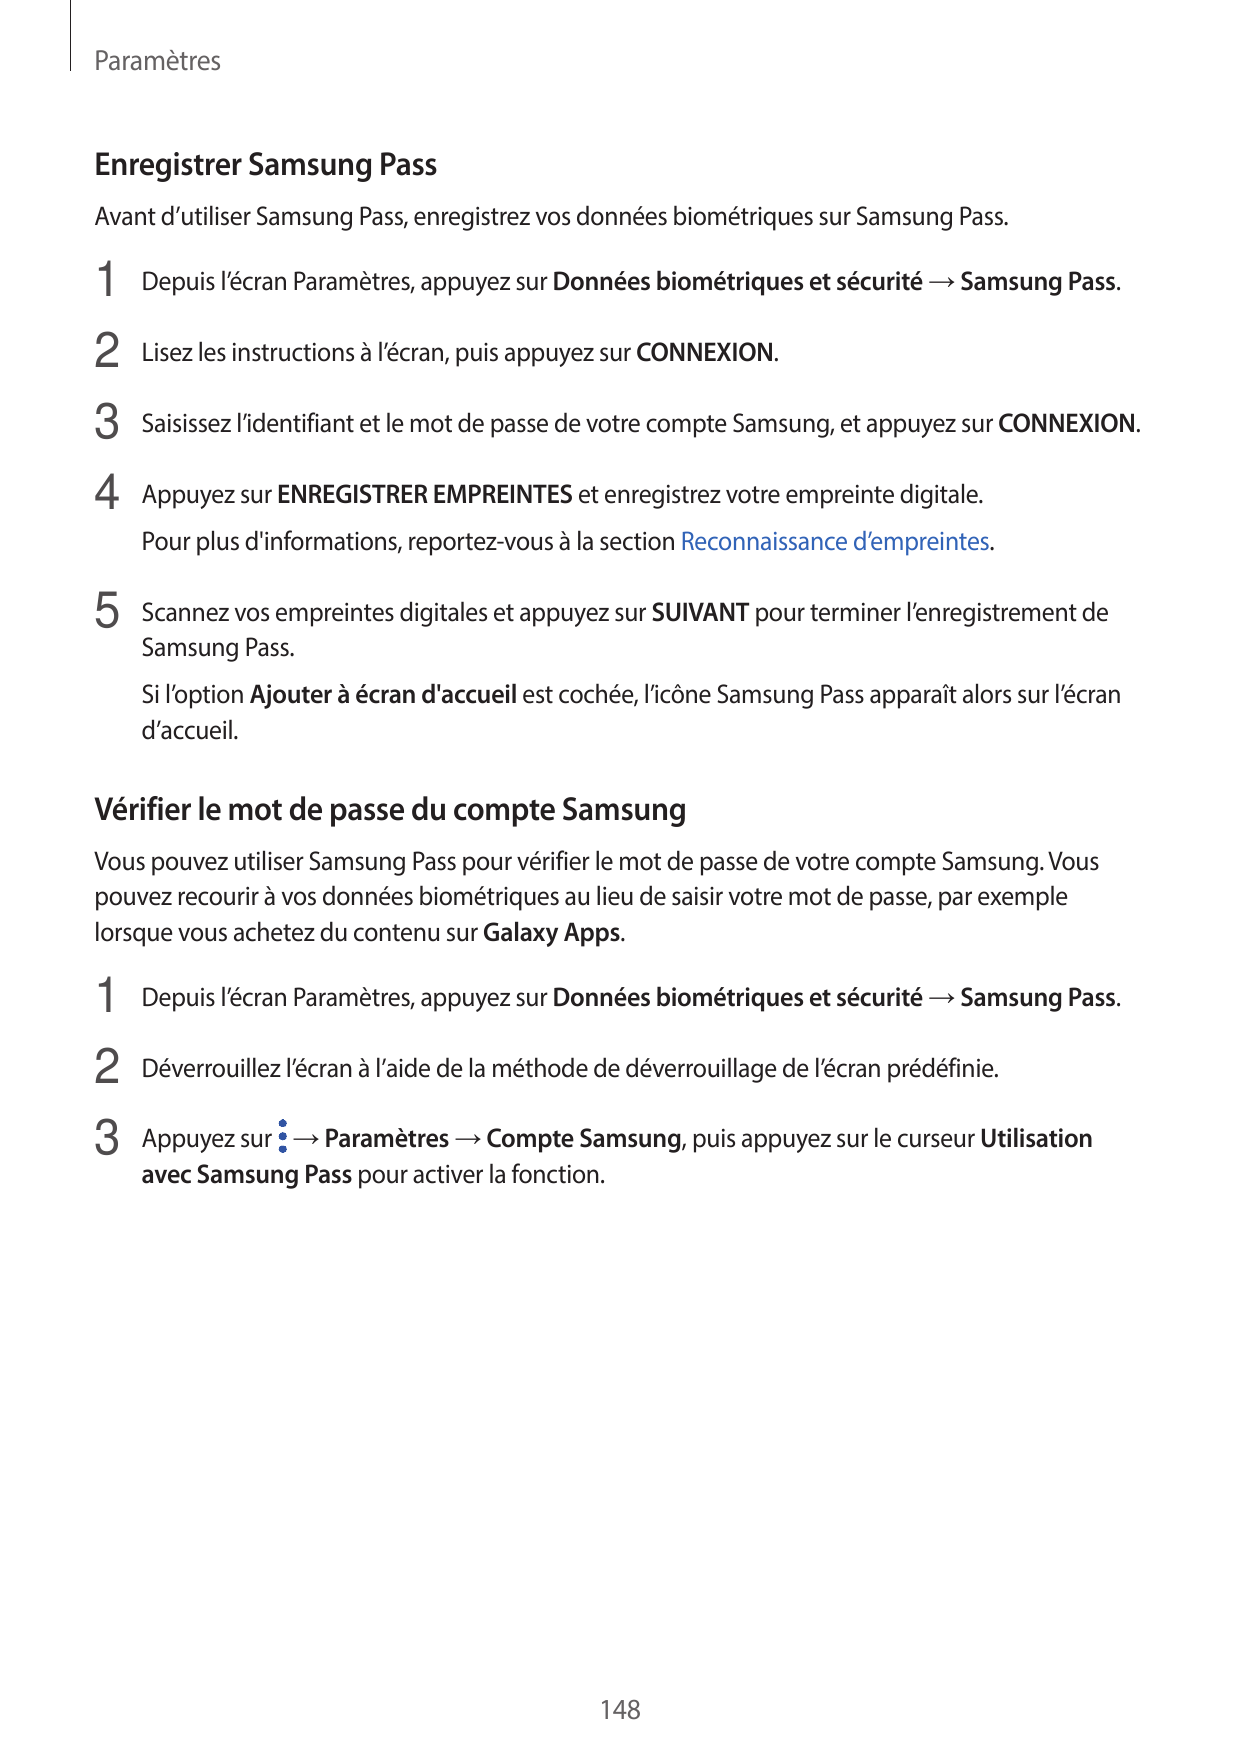 ParamètresEnregistrer Samsung PassAvant d’utiliser Samsung Pass, enregistrez vos données biométriques sur Samsung Pass.1 Depuis 